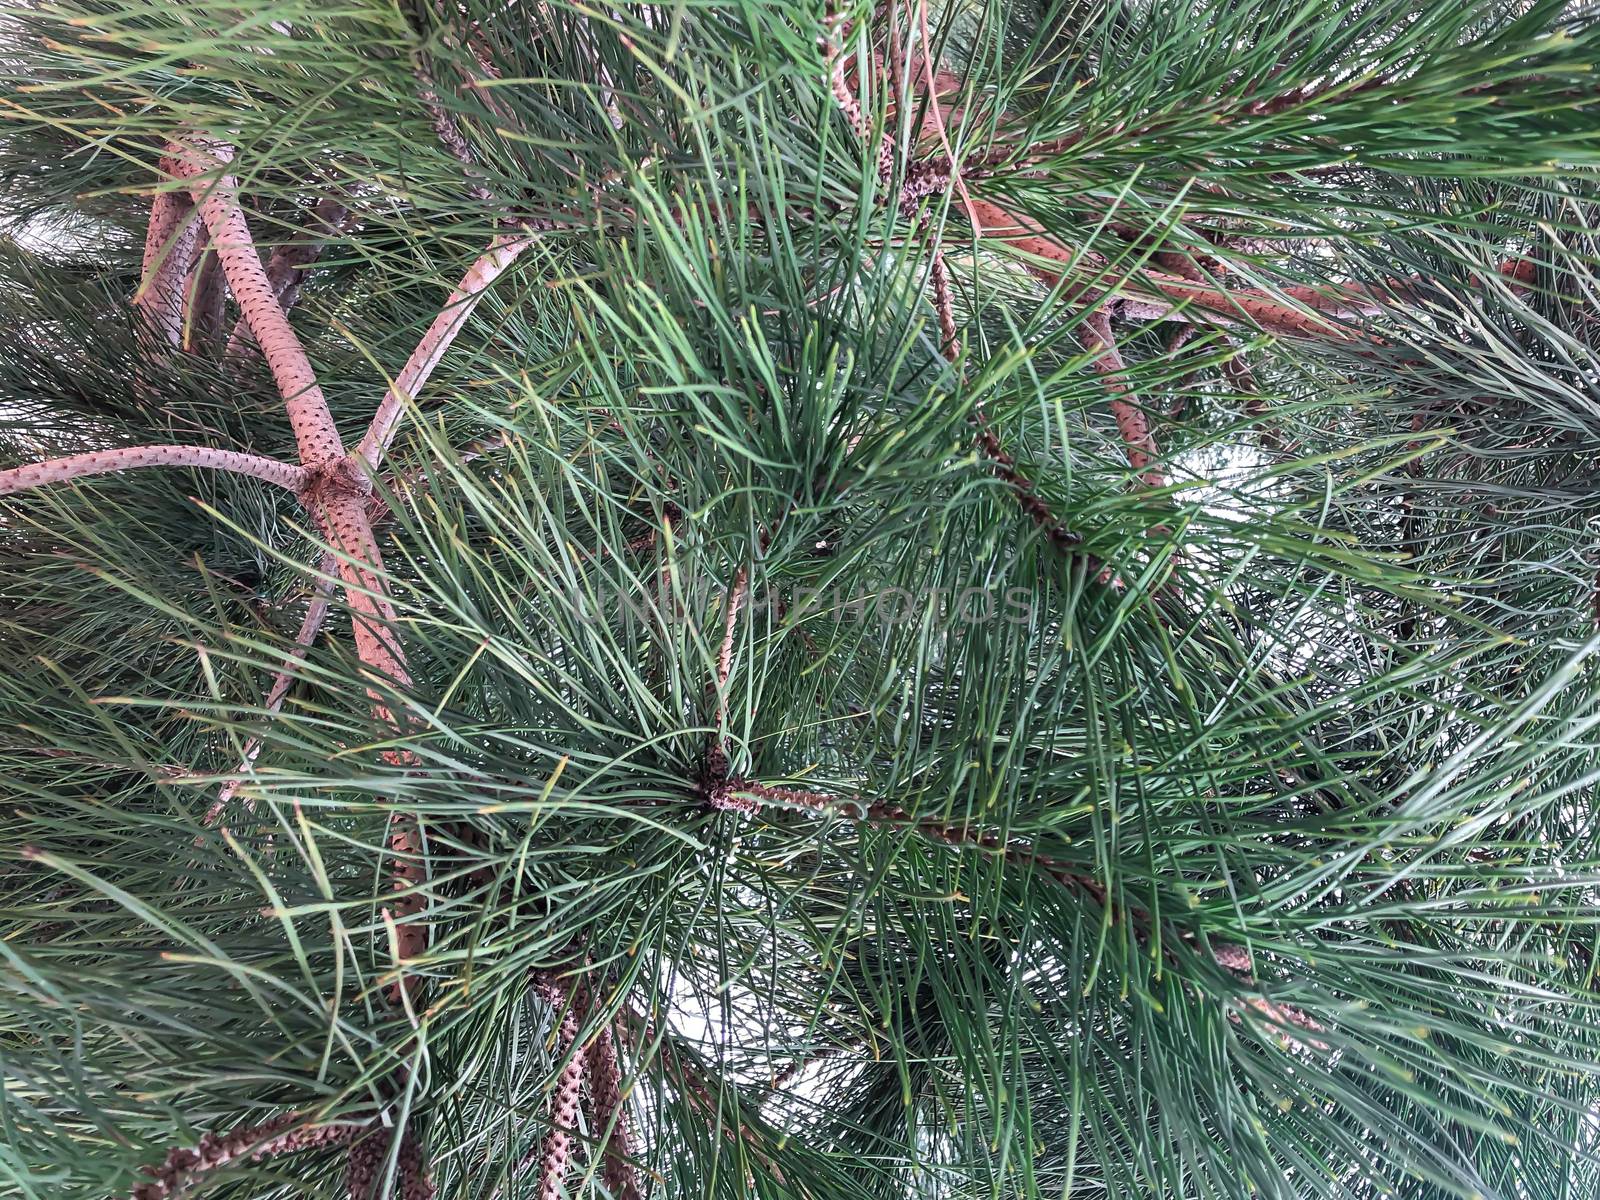 Close up green pine tree needles

